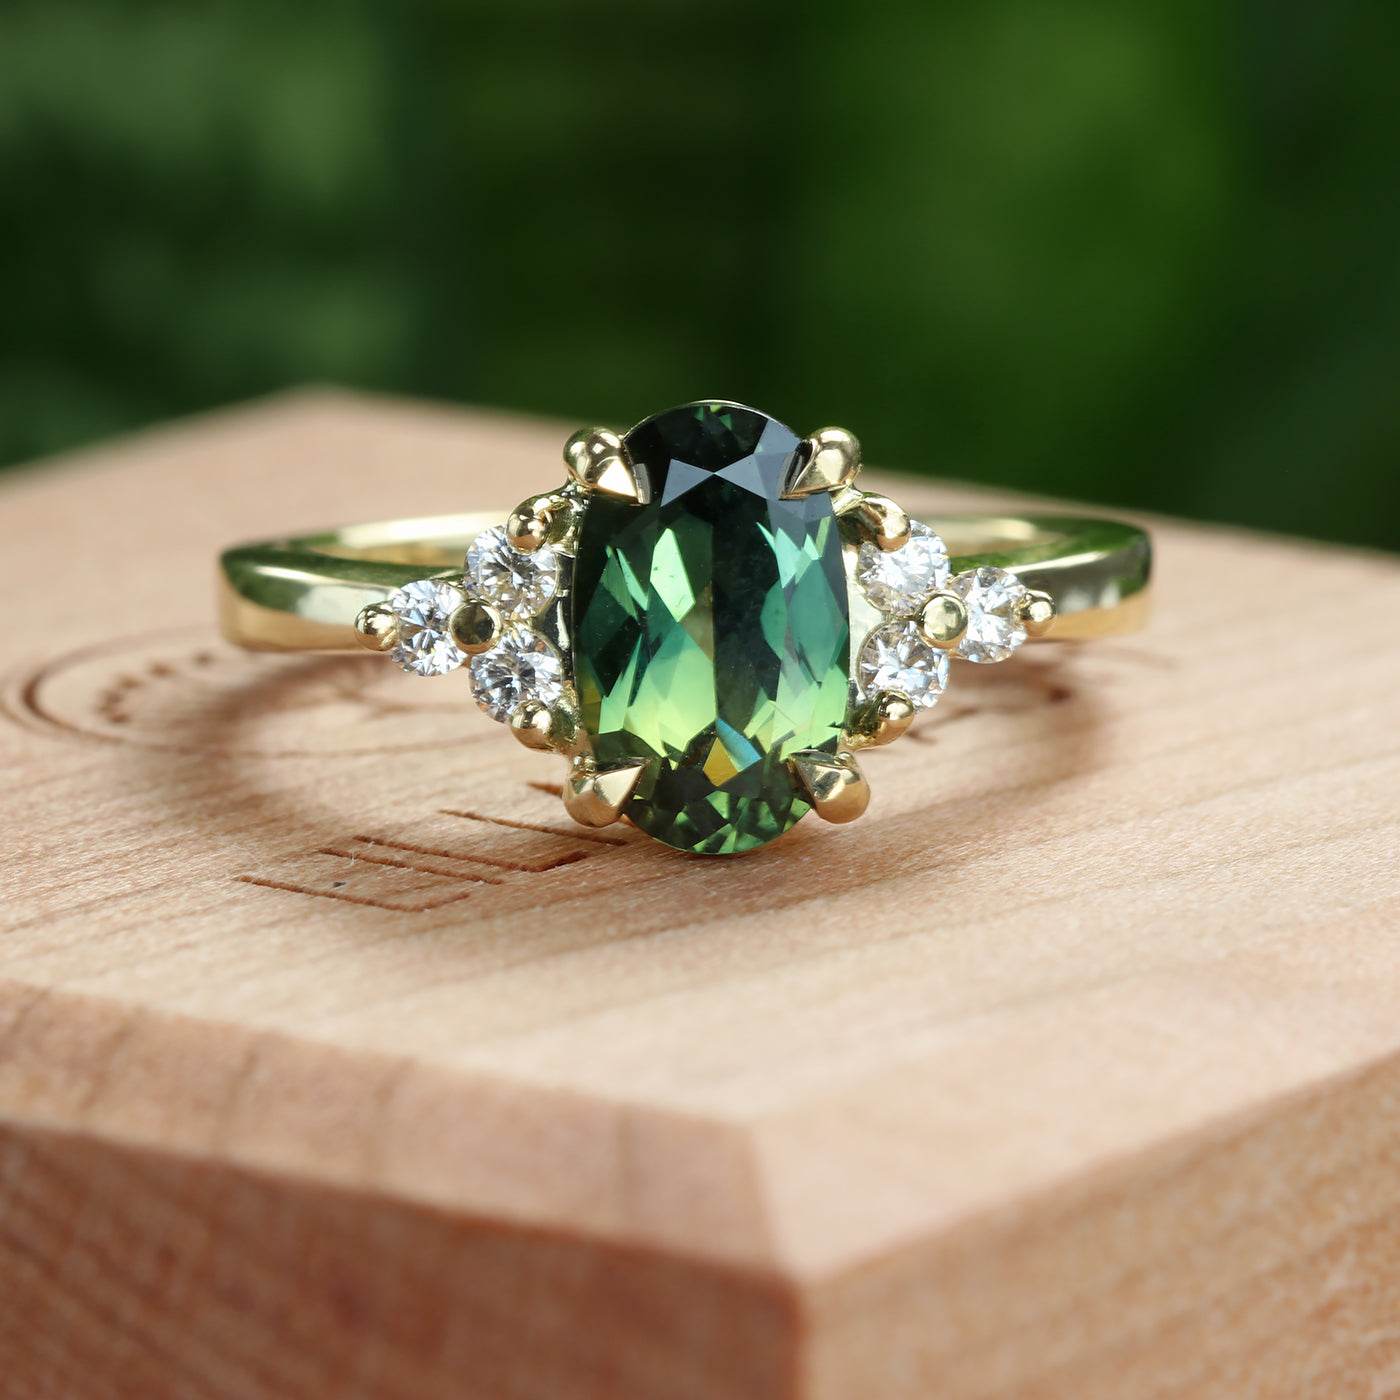 Select Green Sapphire Engagement Rings | Glamira.com.au